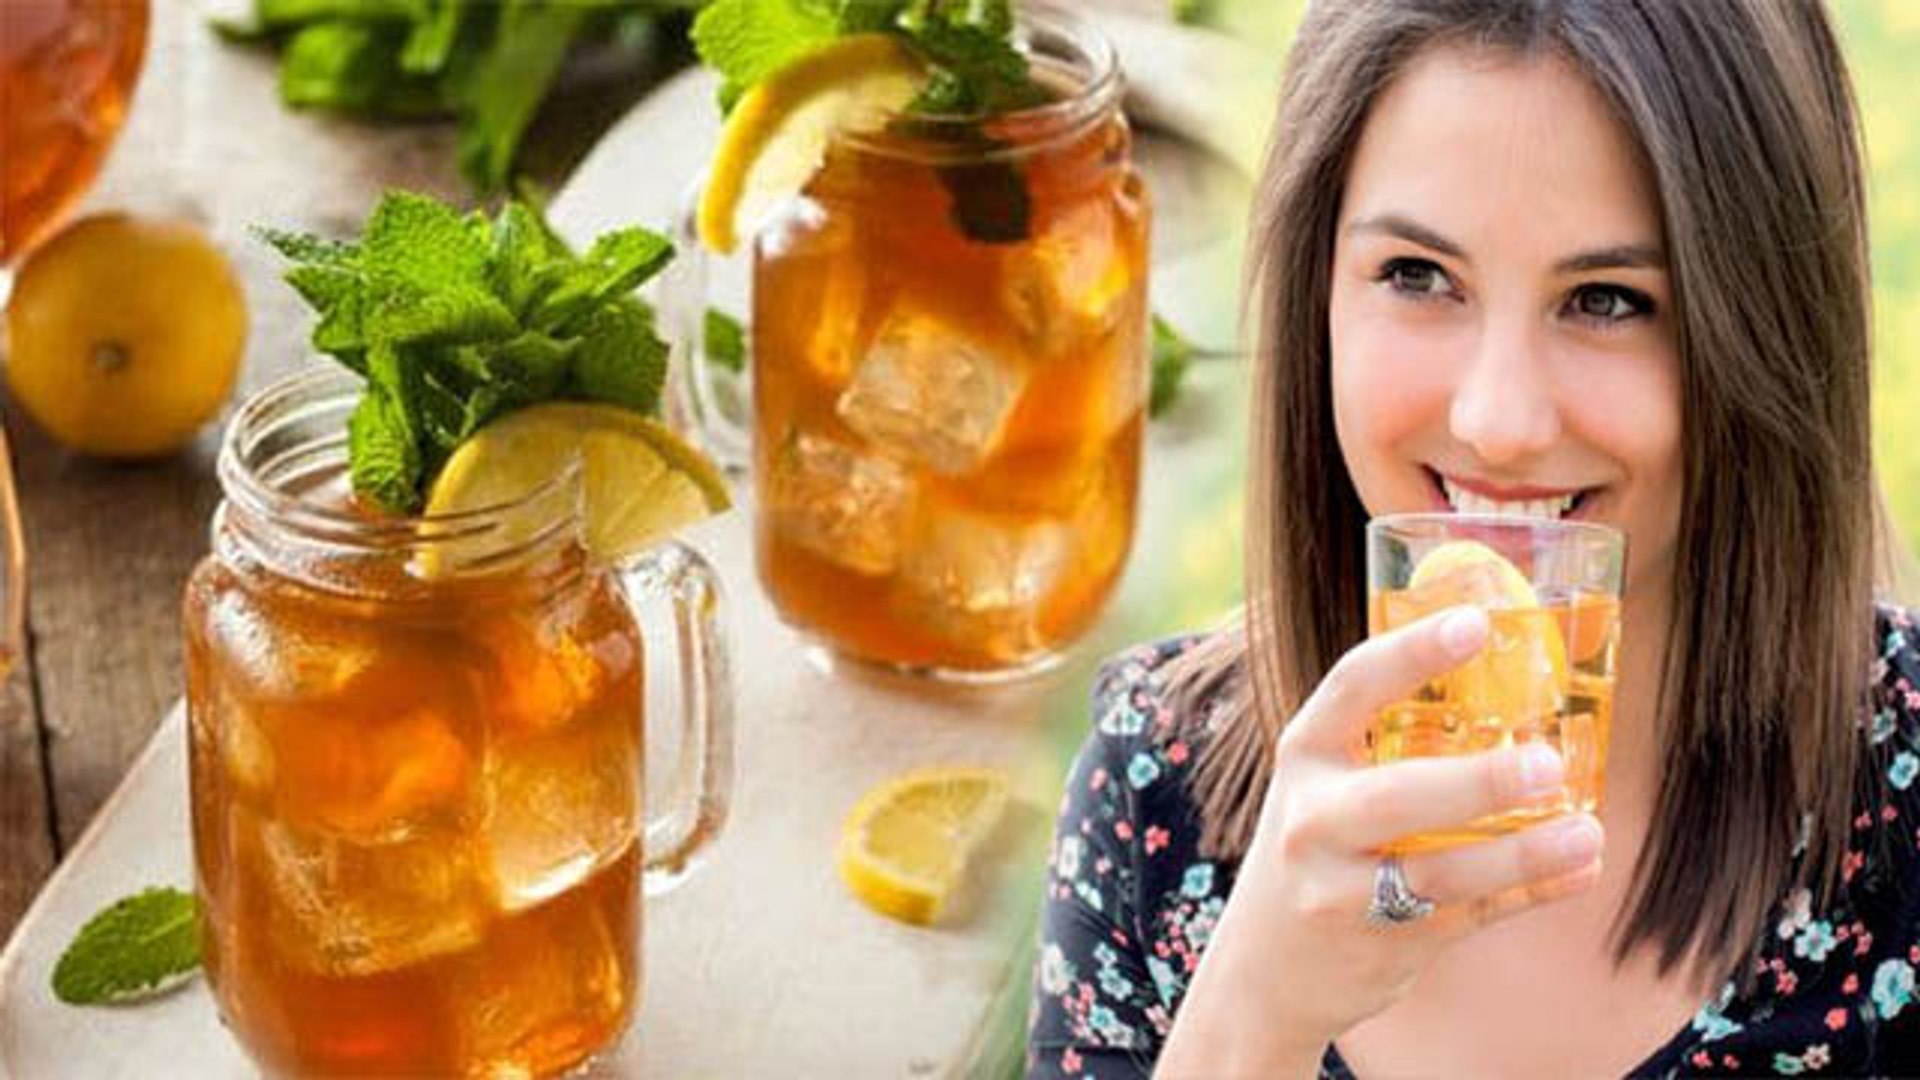 आइस टी पीने के फायदे और नुकसान | Ice Tea Pine ke Fayde aur Nuksan | Boldsky